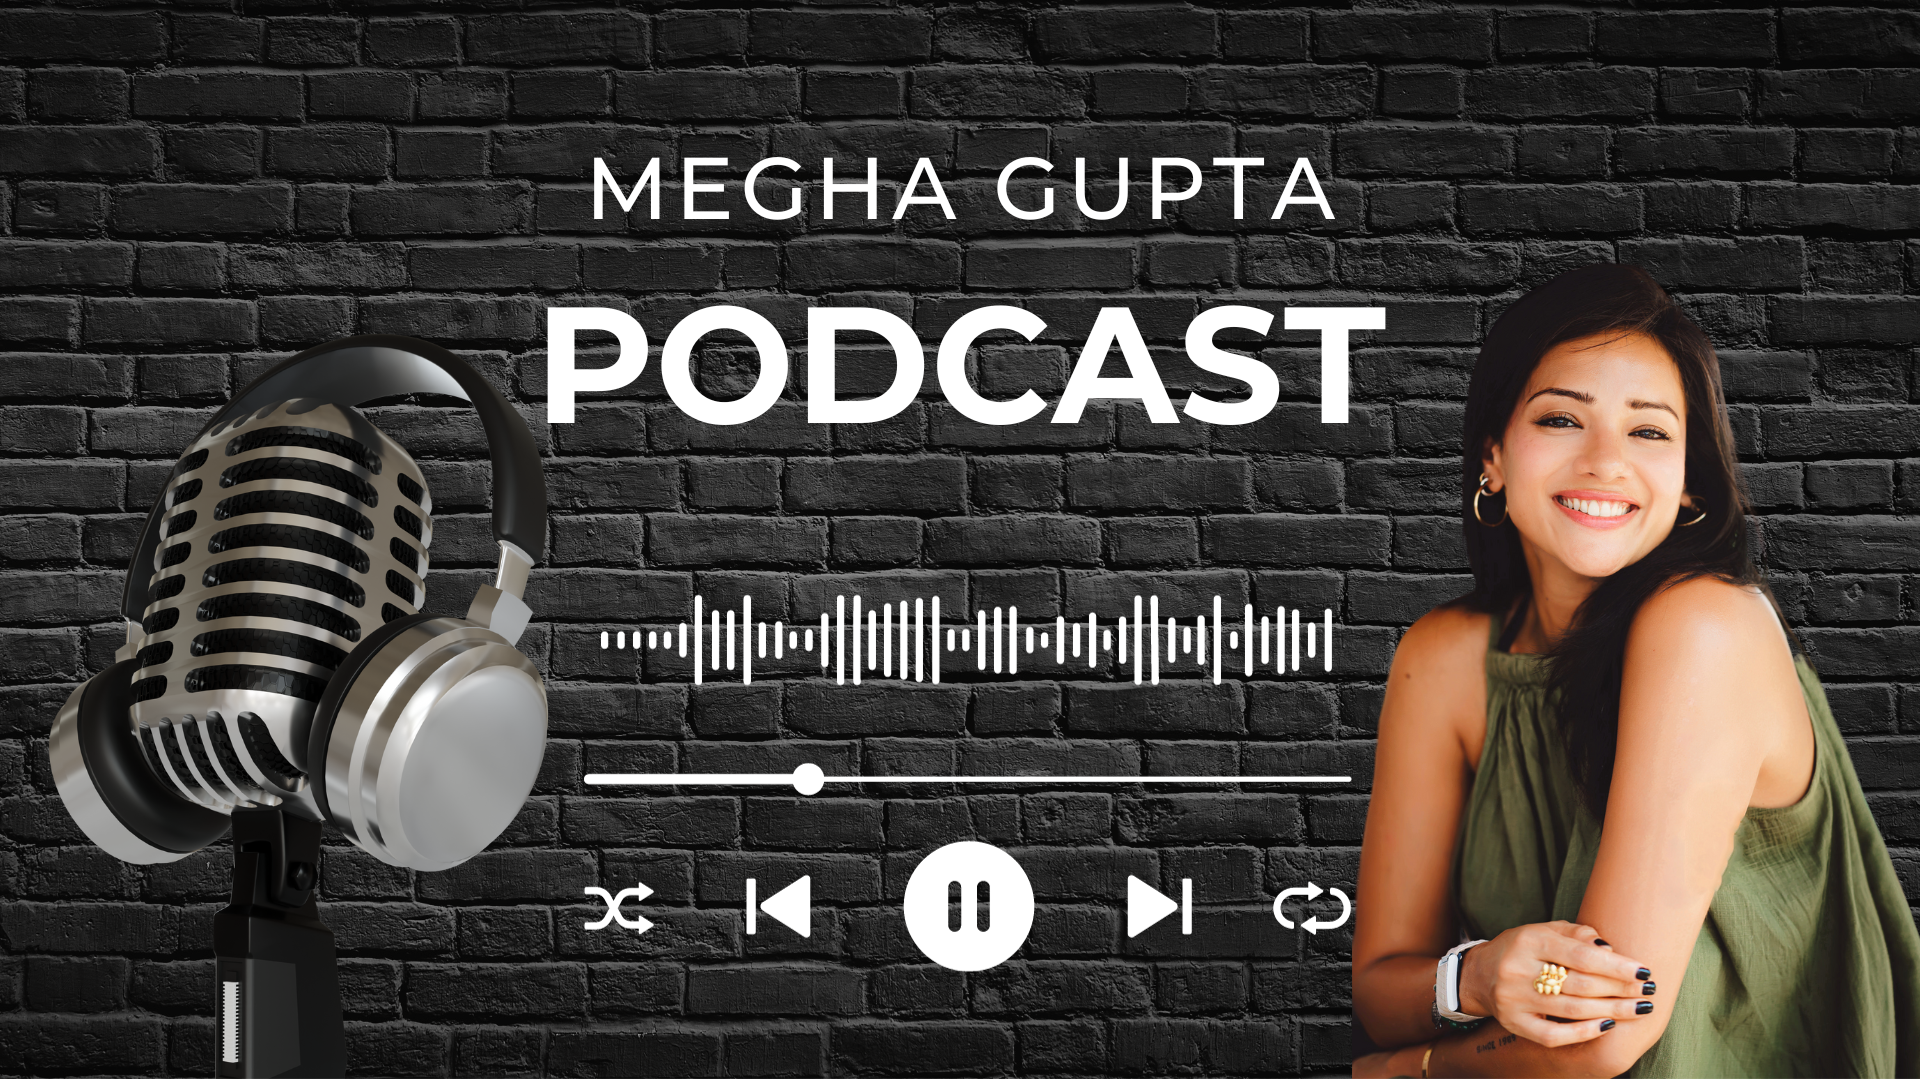 Megha Gupta's Podcast